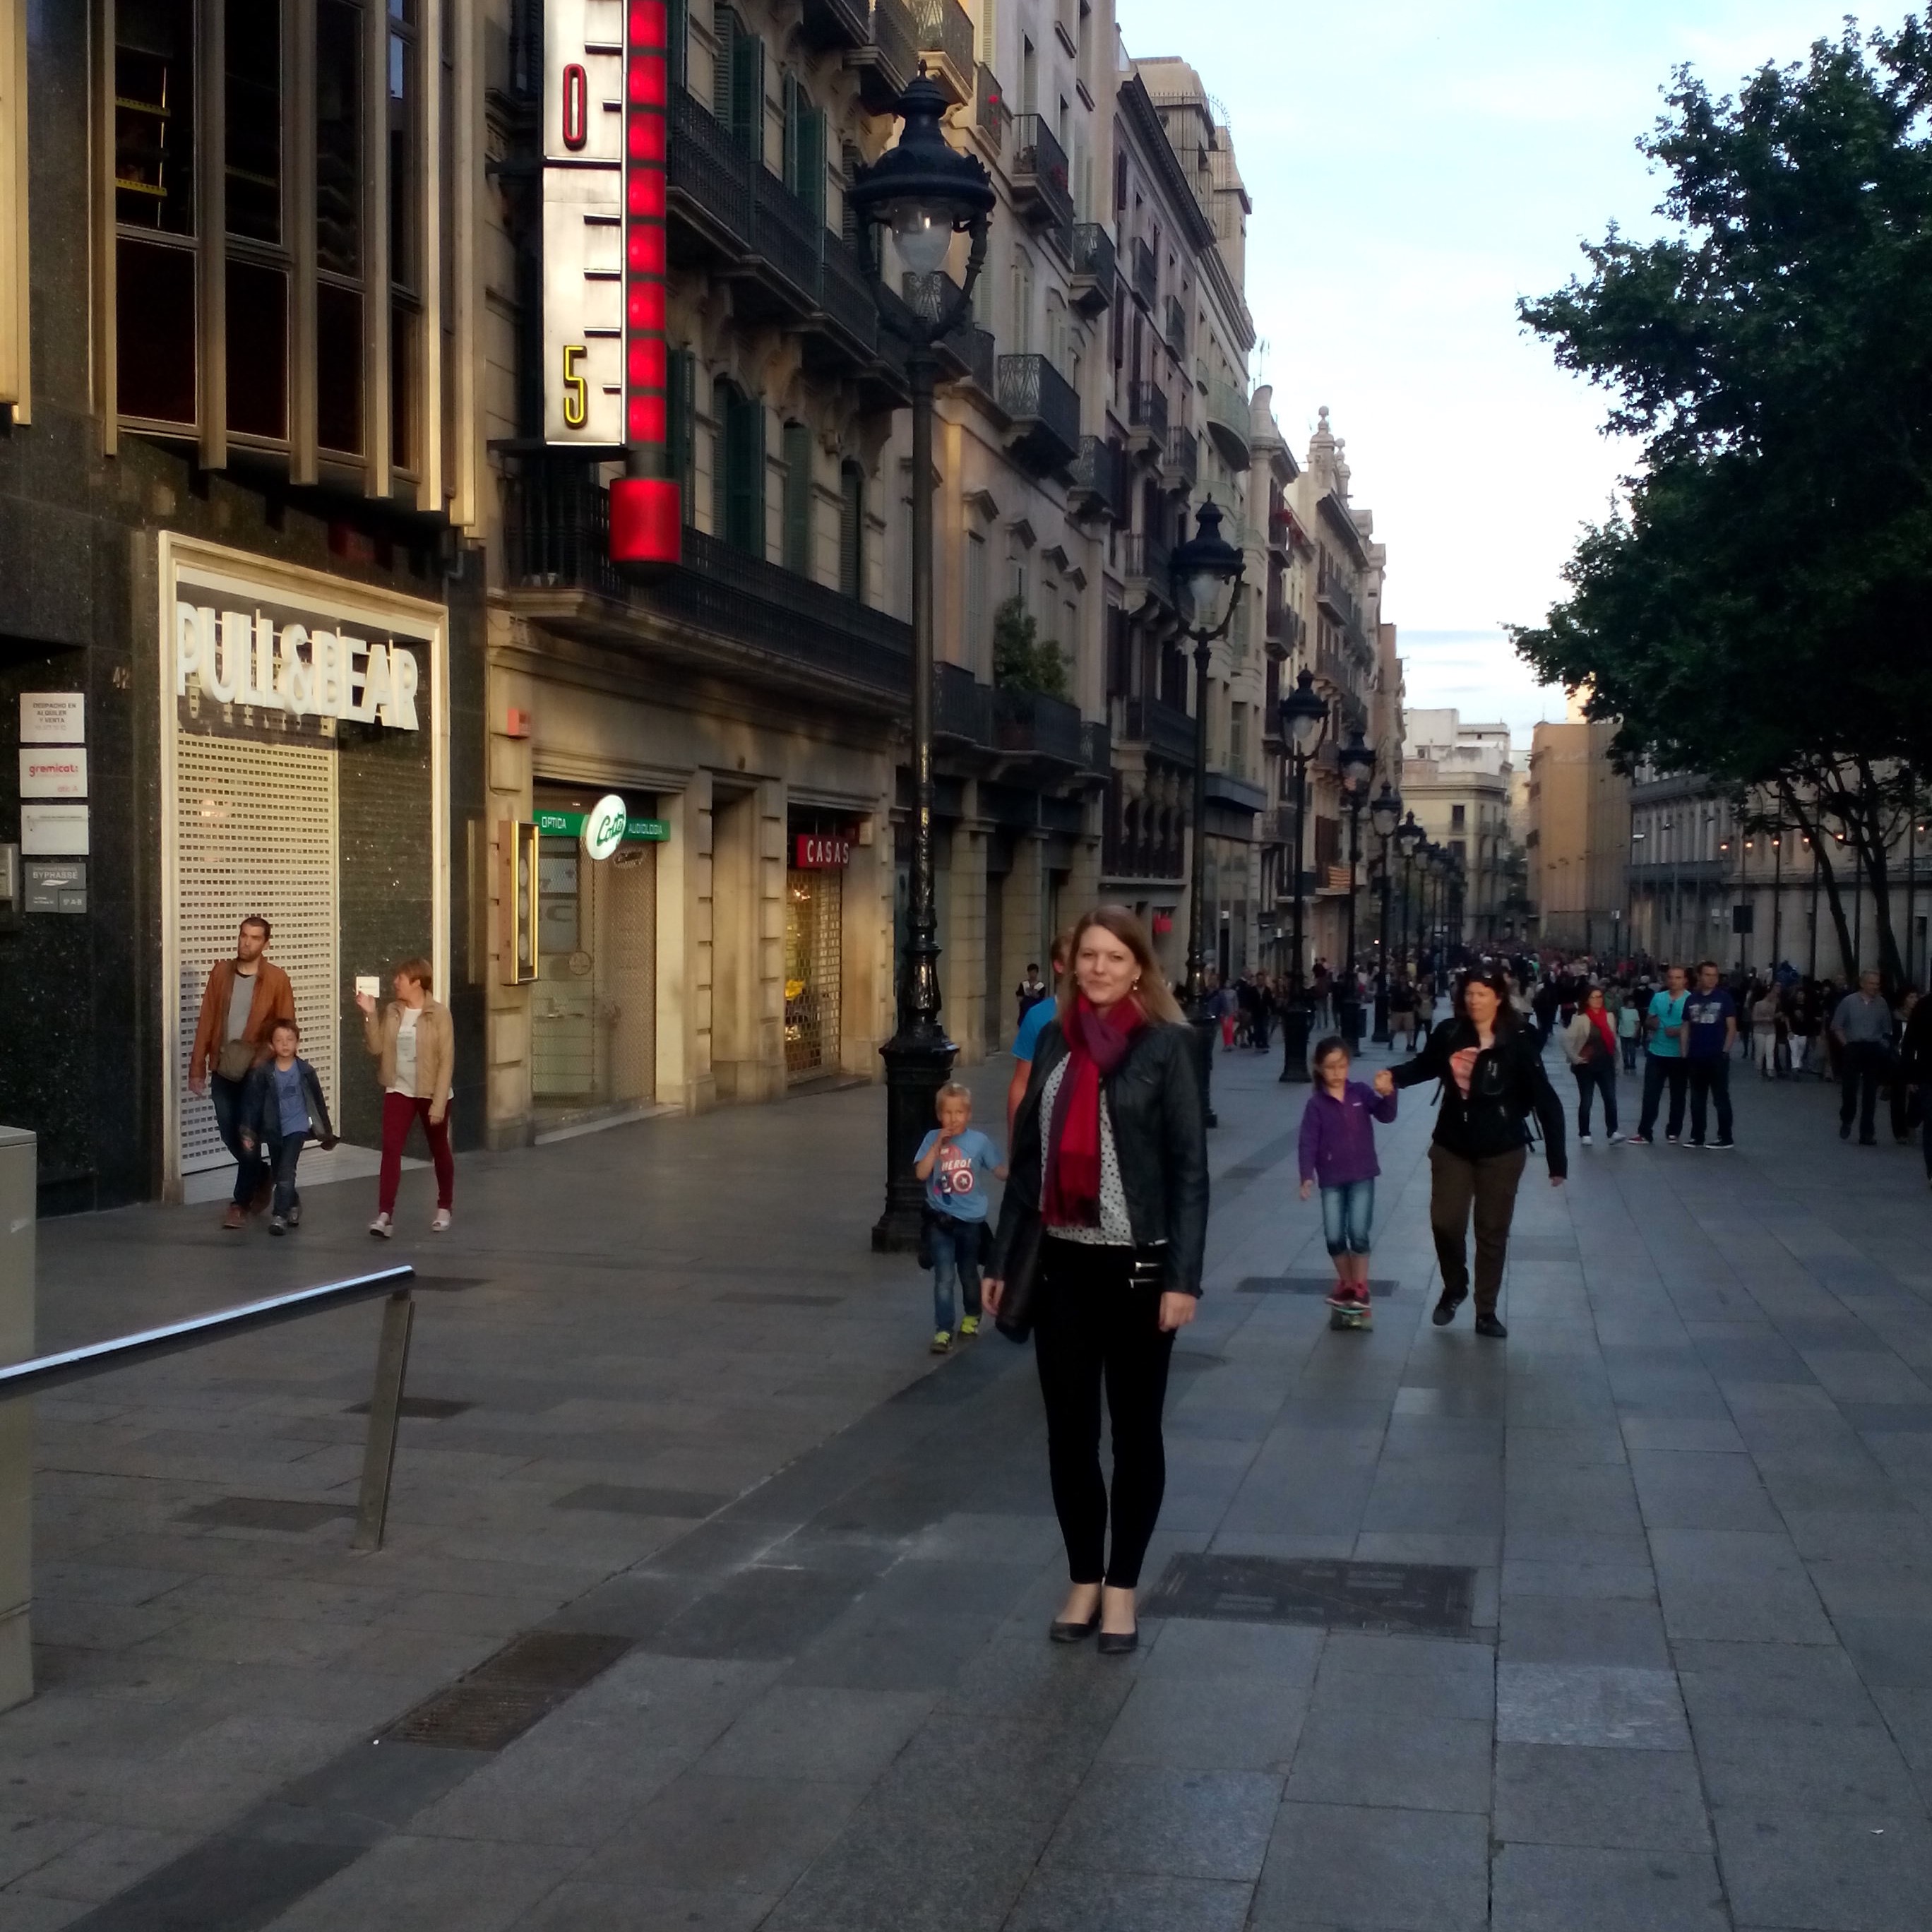 Barcelona stedentrip